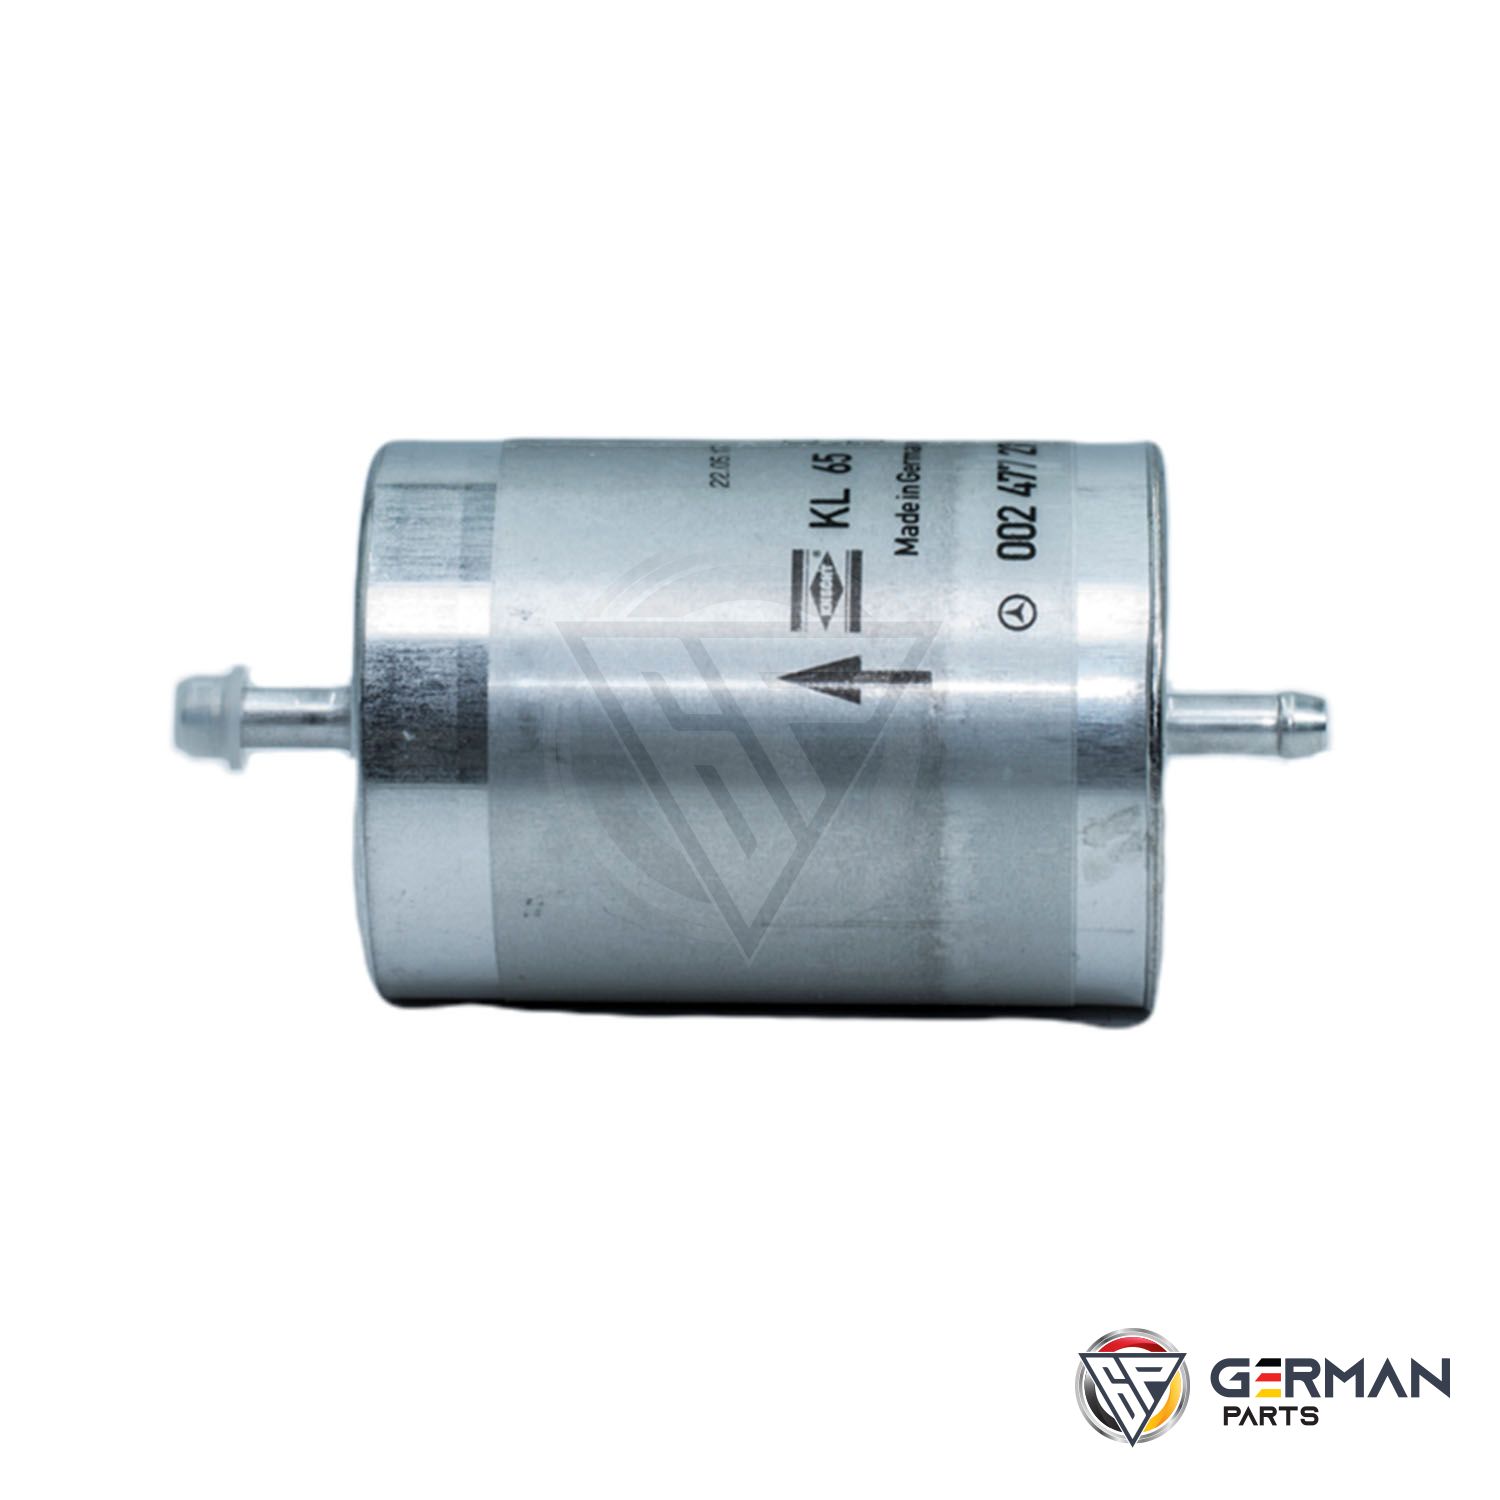 Buy Mercedes Benz Fuel Filter 0024772701 - German Parts